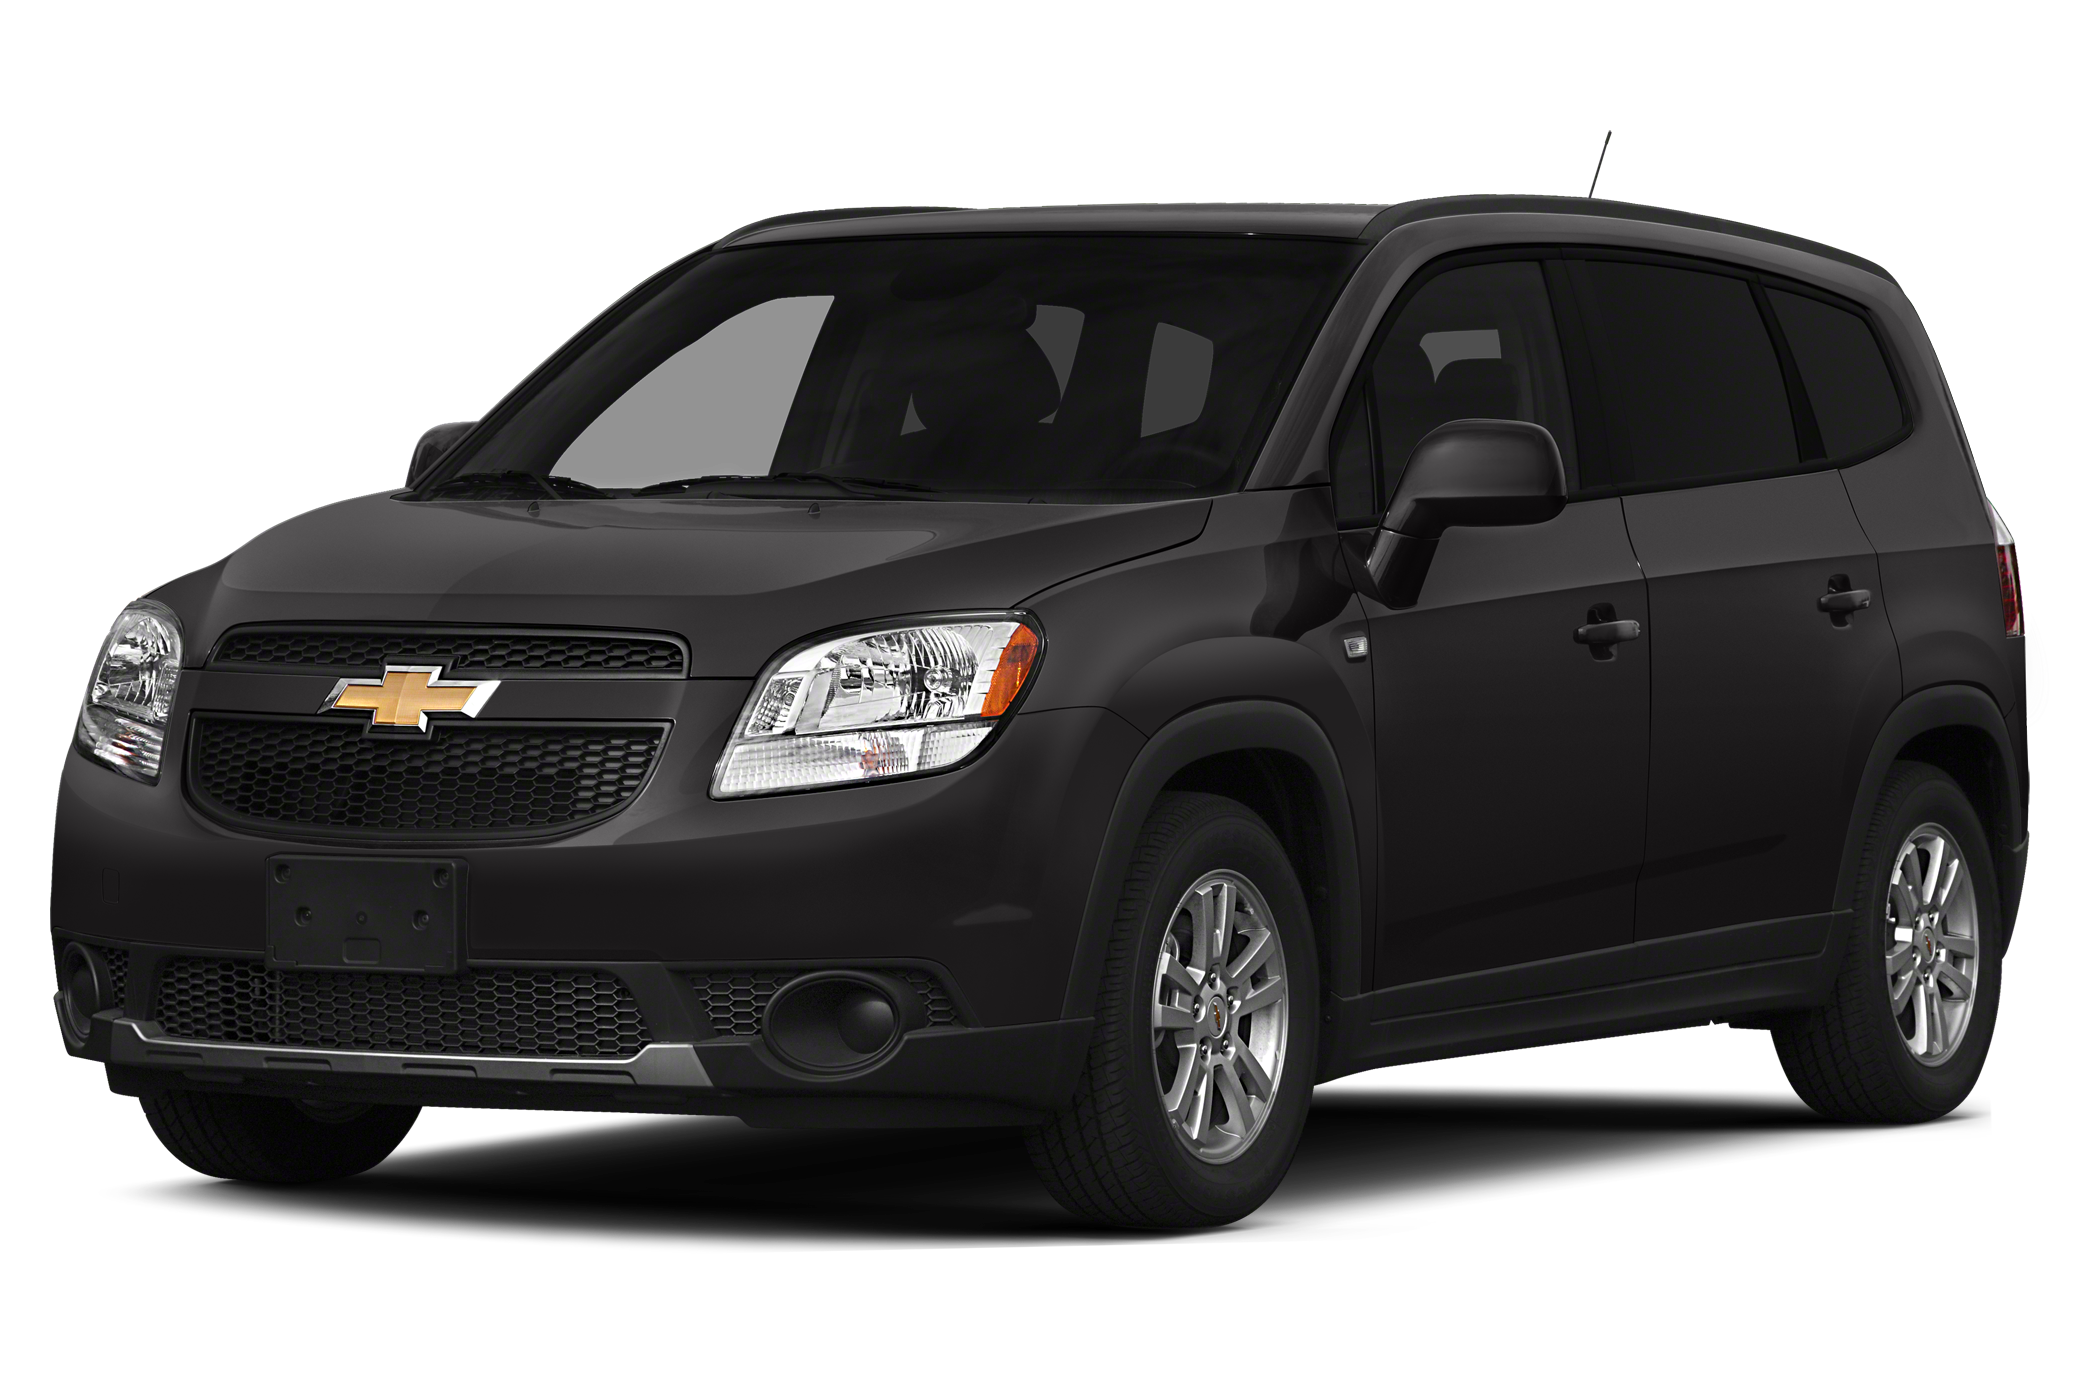 2014 Chevrolet Orlando - View Specs, Prices & Photos - WHEELS.ca